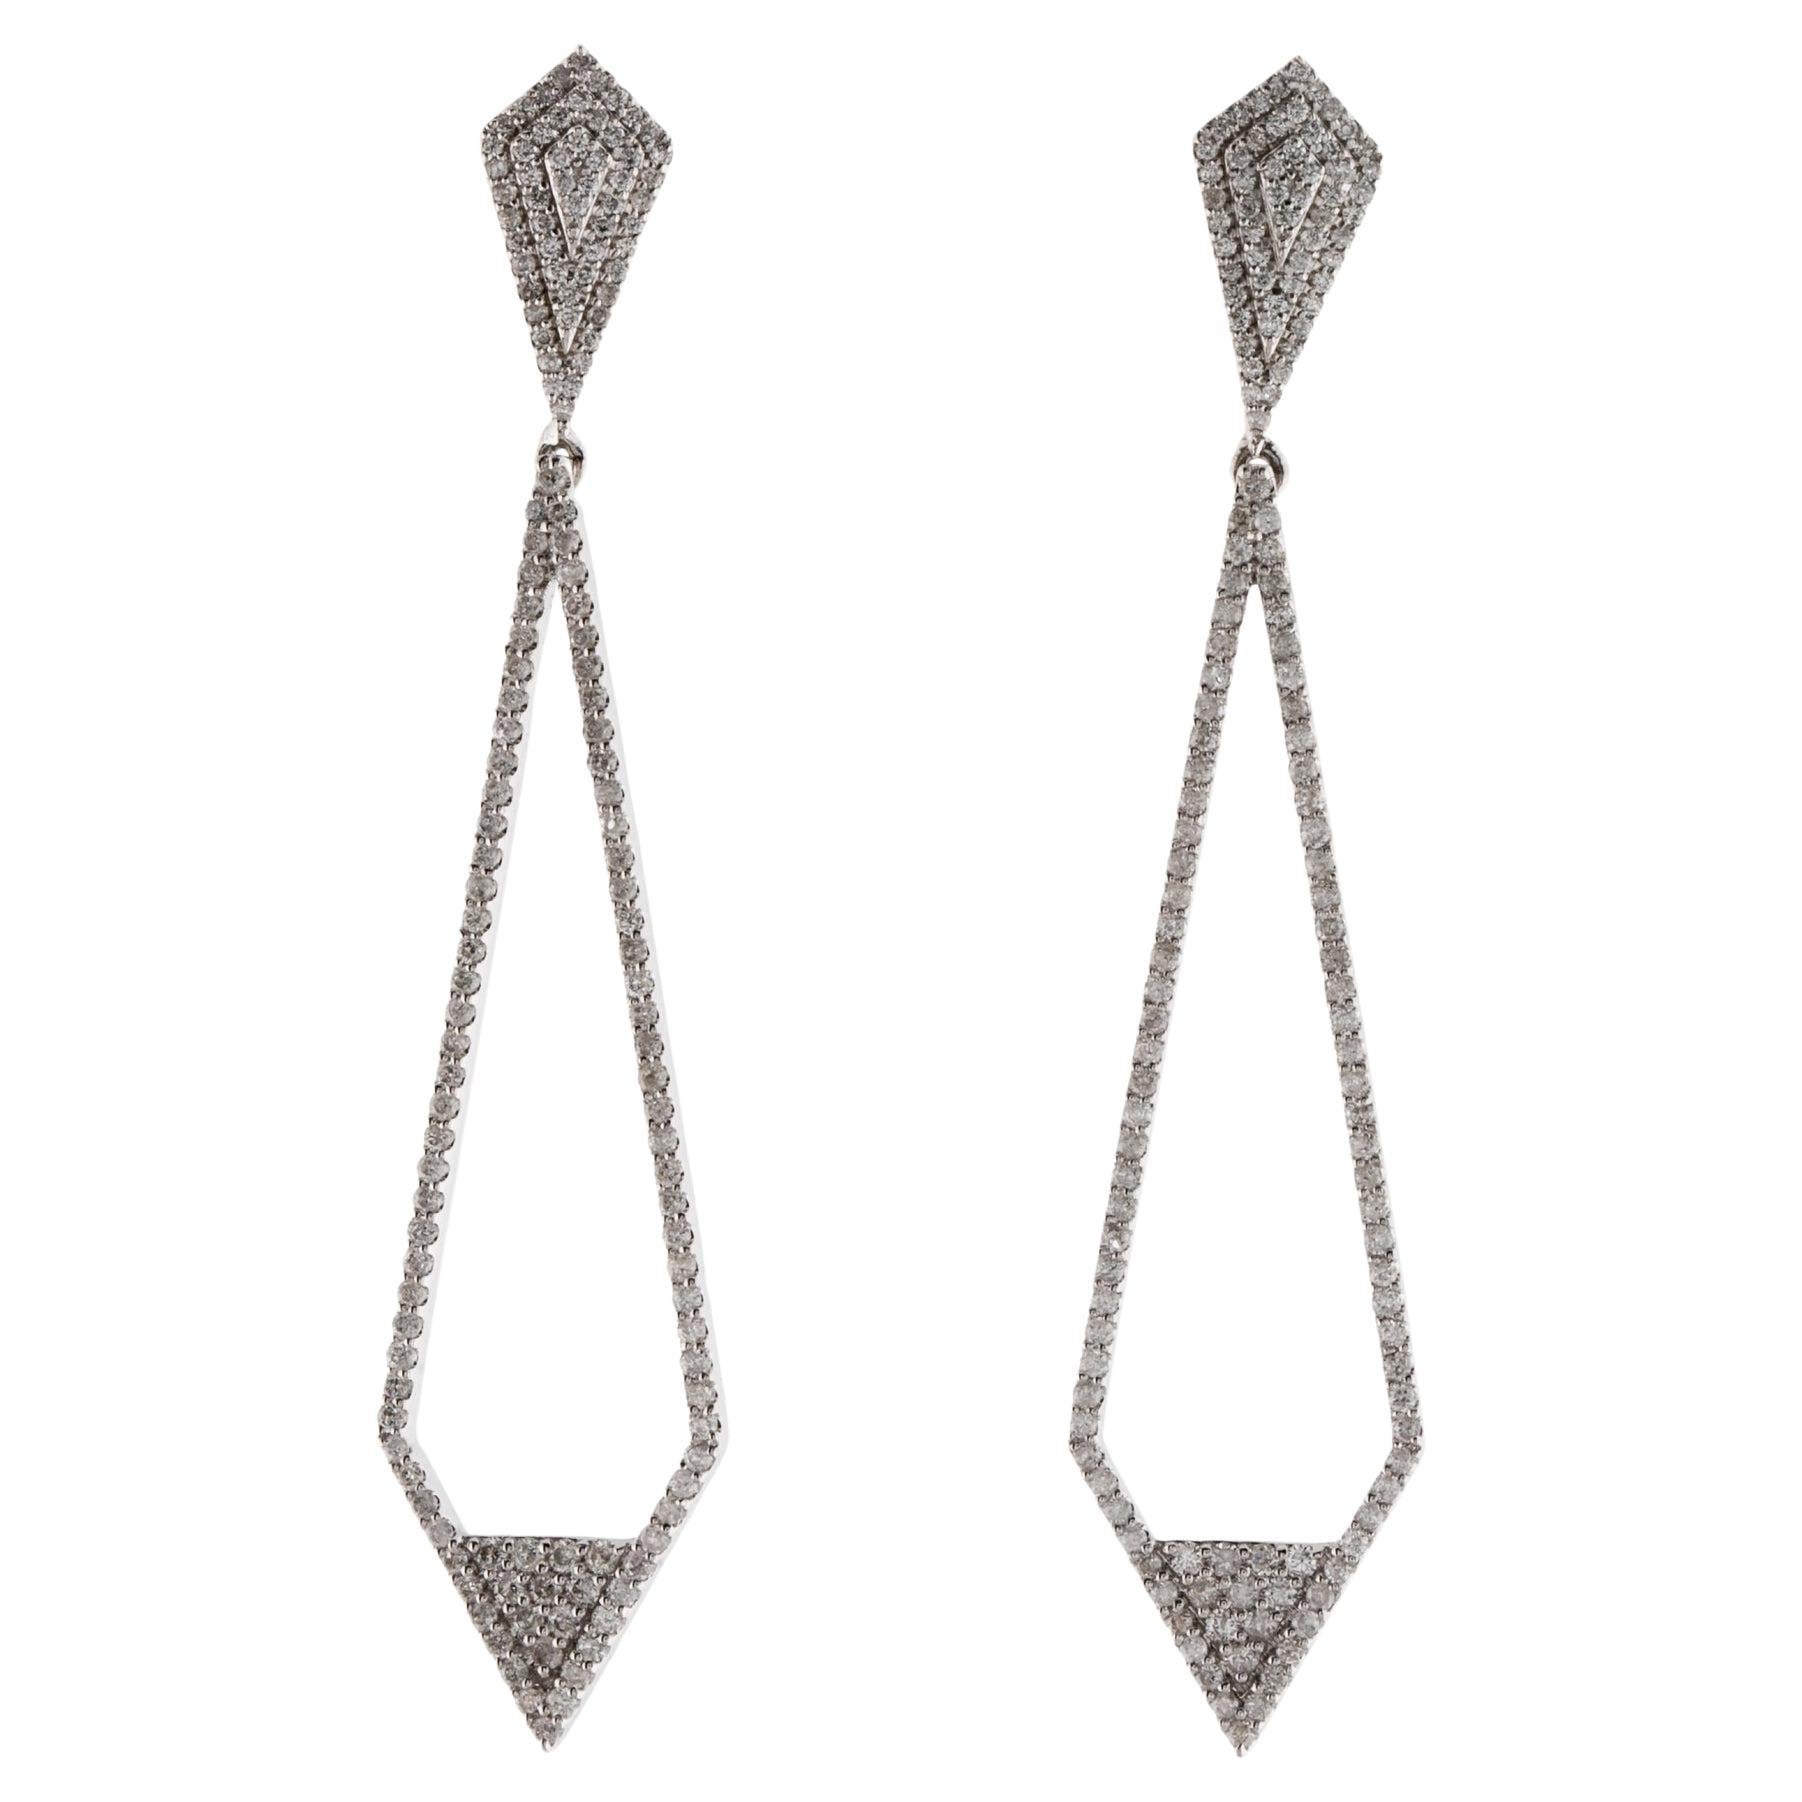 Stunning 14K Diamond Drop Earrings - 1.13ctw Sparkle & Style, Elegant Jewelry For Sale